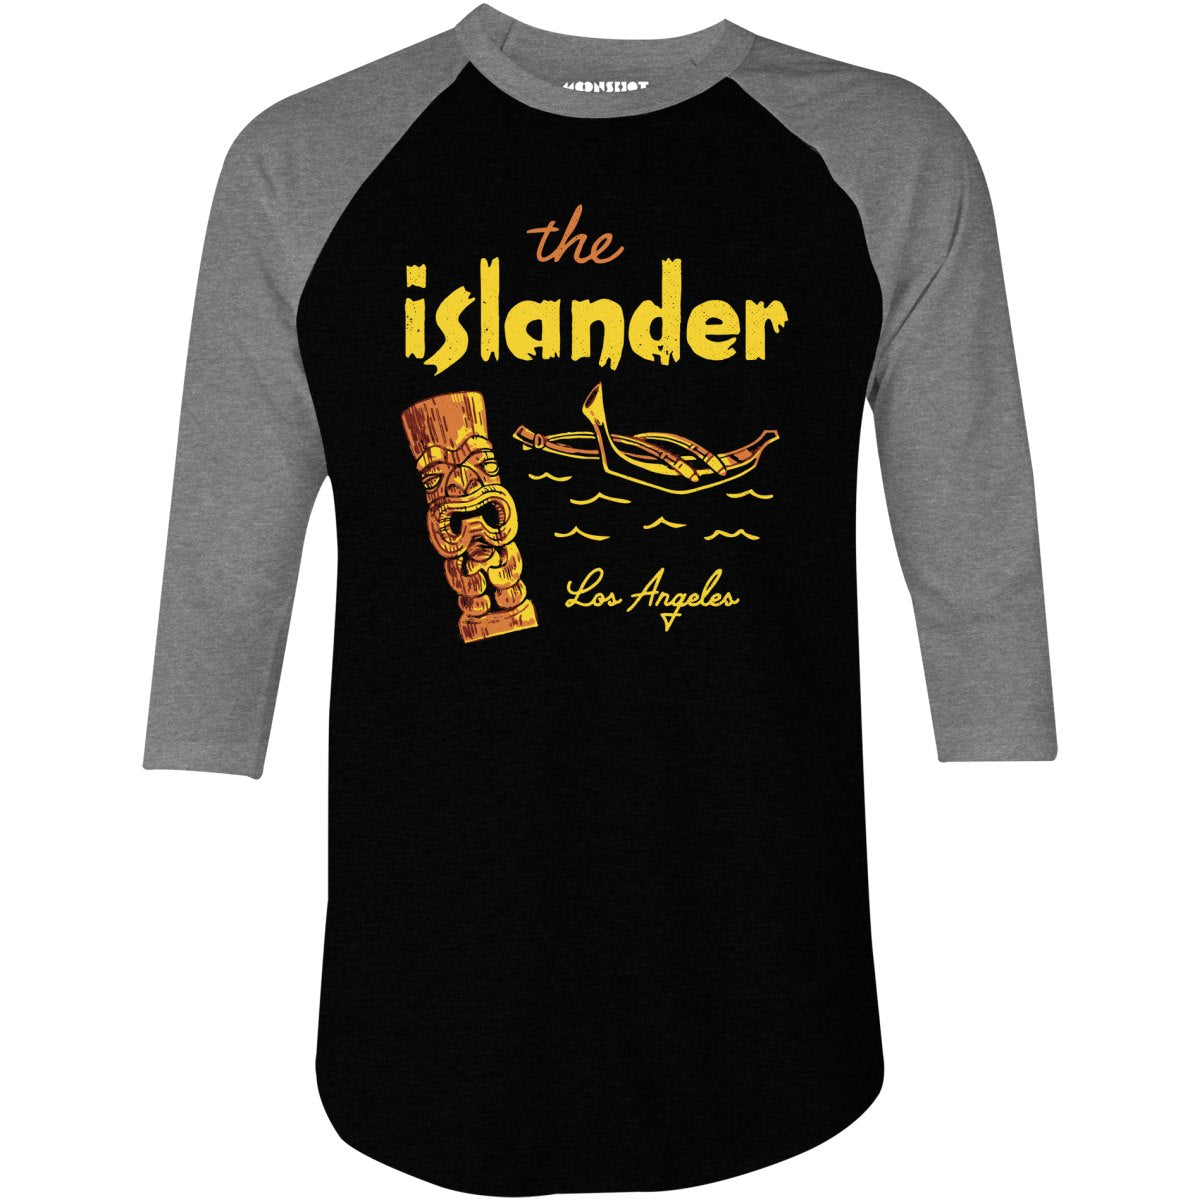 The Islander v2 - Los Angeles, CA - Vintage Tiki Bar - 3/4 Sleeve Raglan T-Shirt